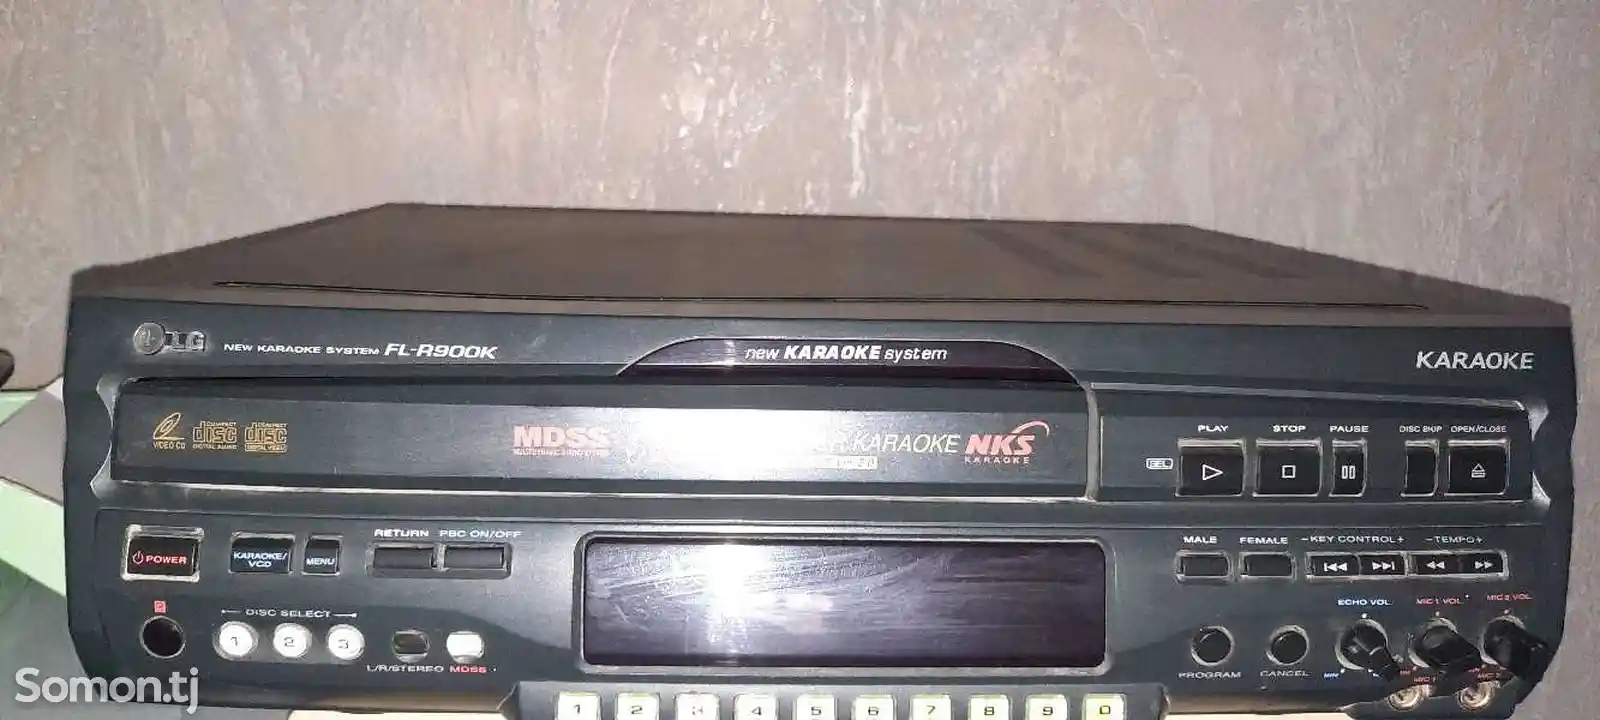 Premier PR-3900 аудио vcd система караоке-2